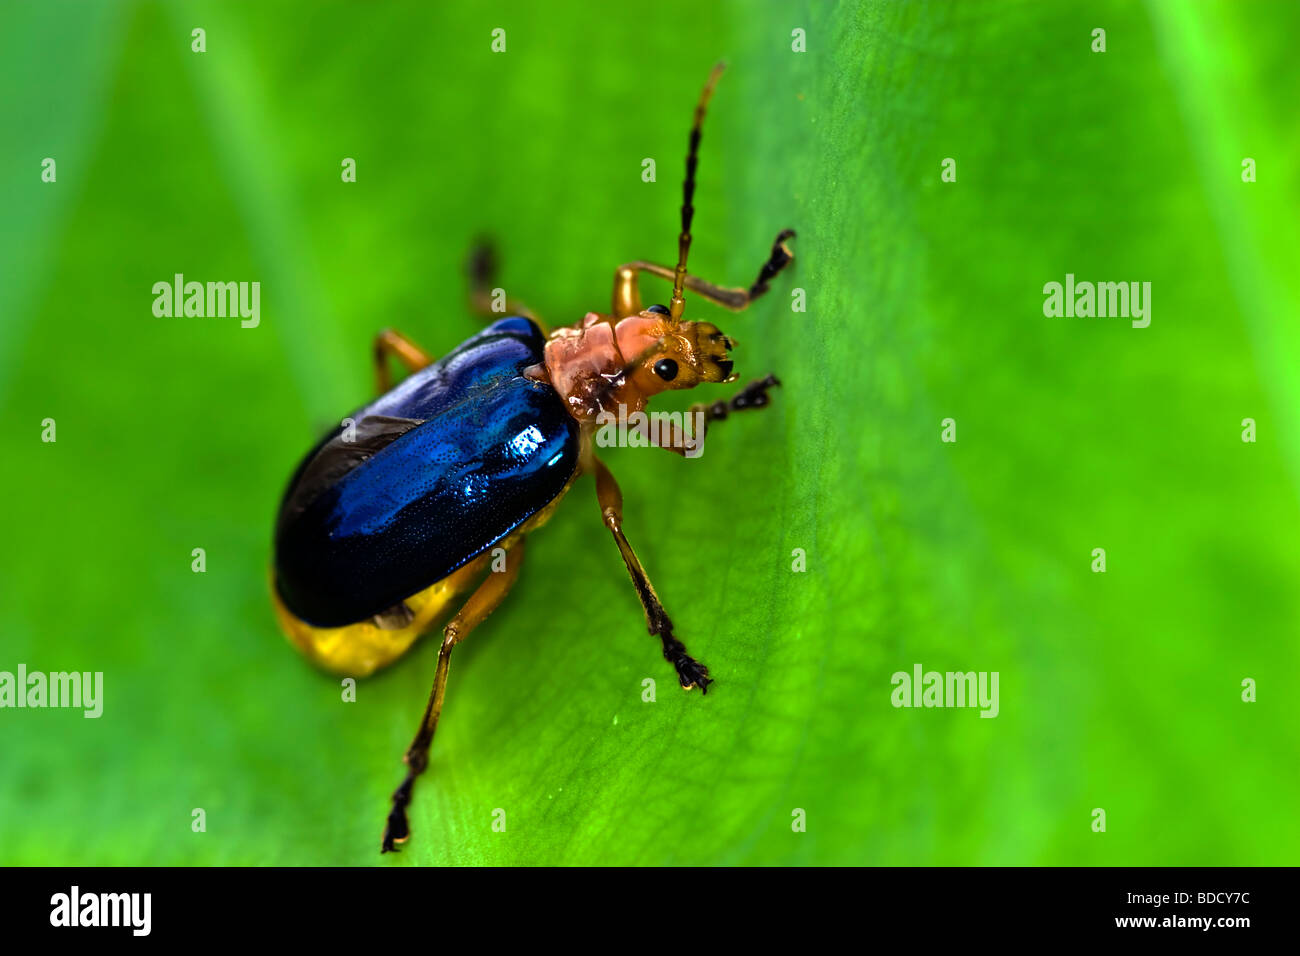 Beetles on a leaf Stock Photo